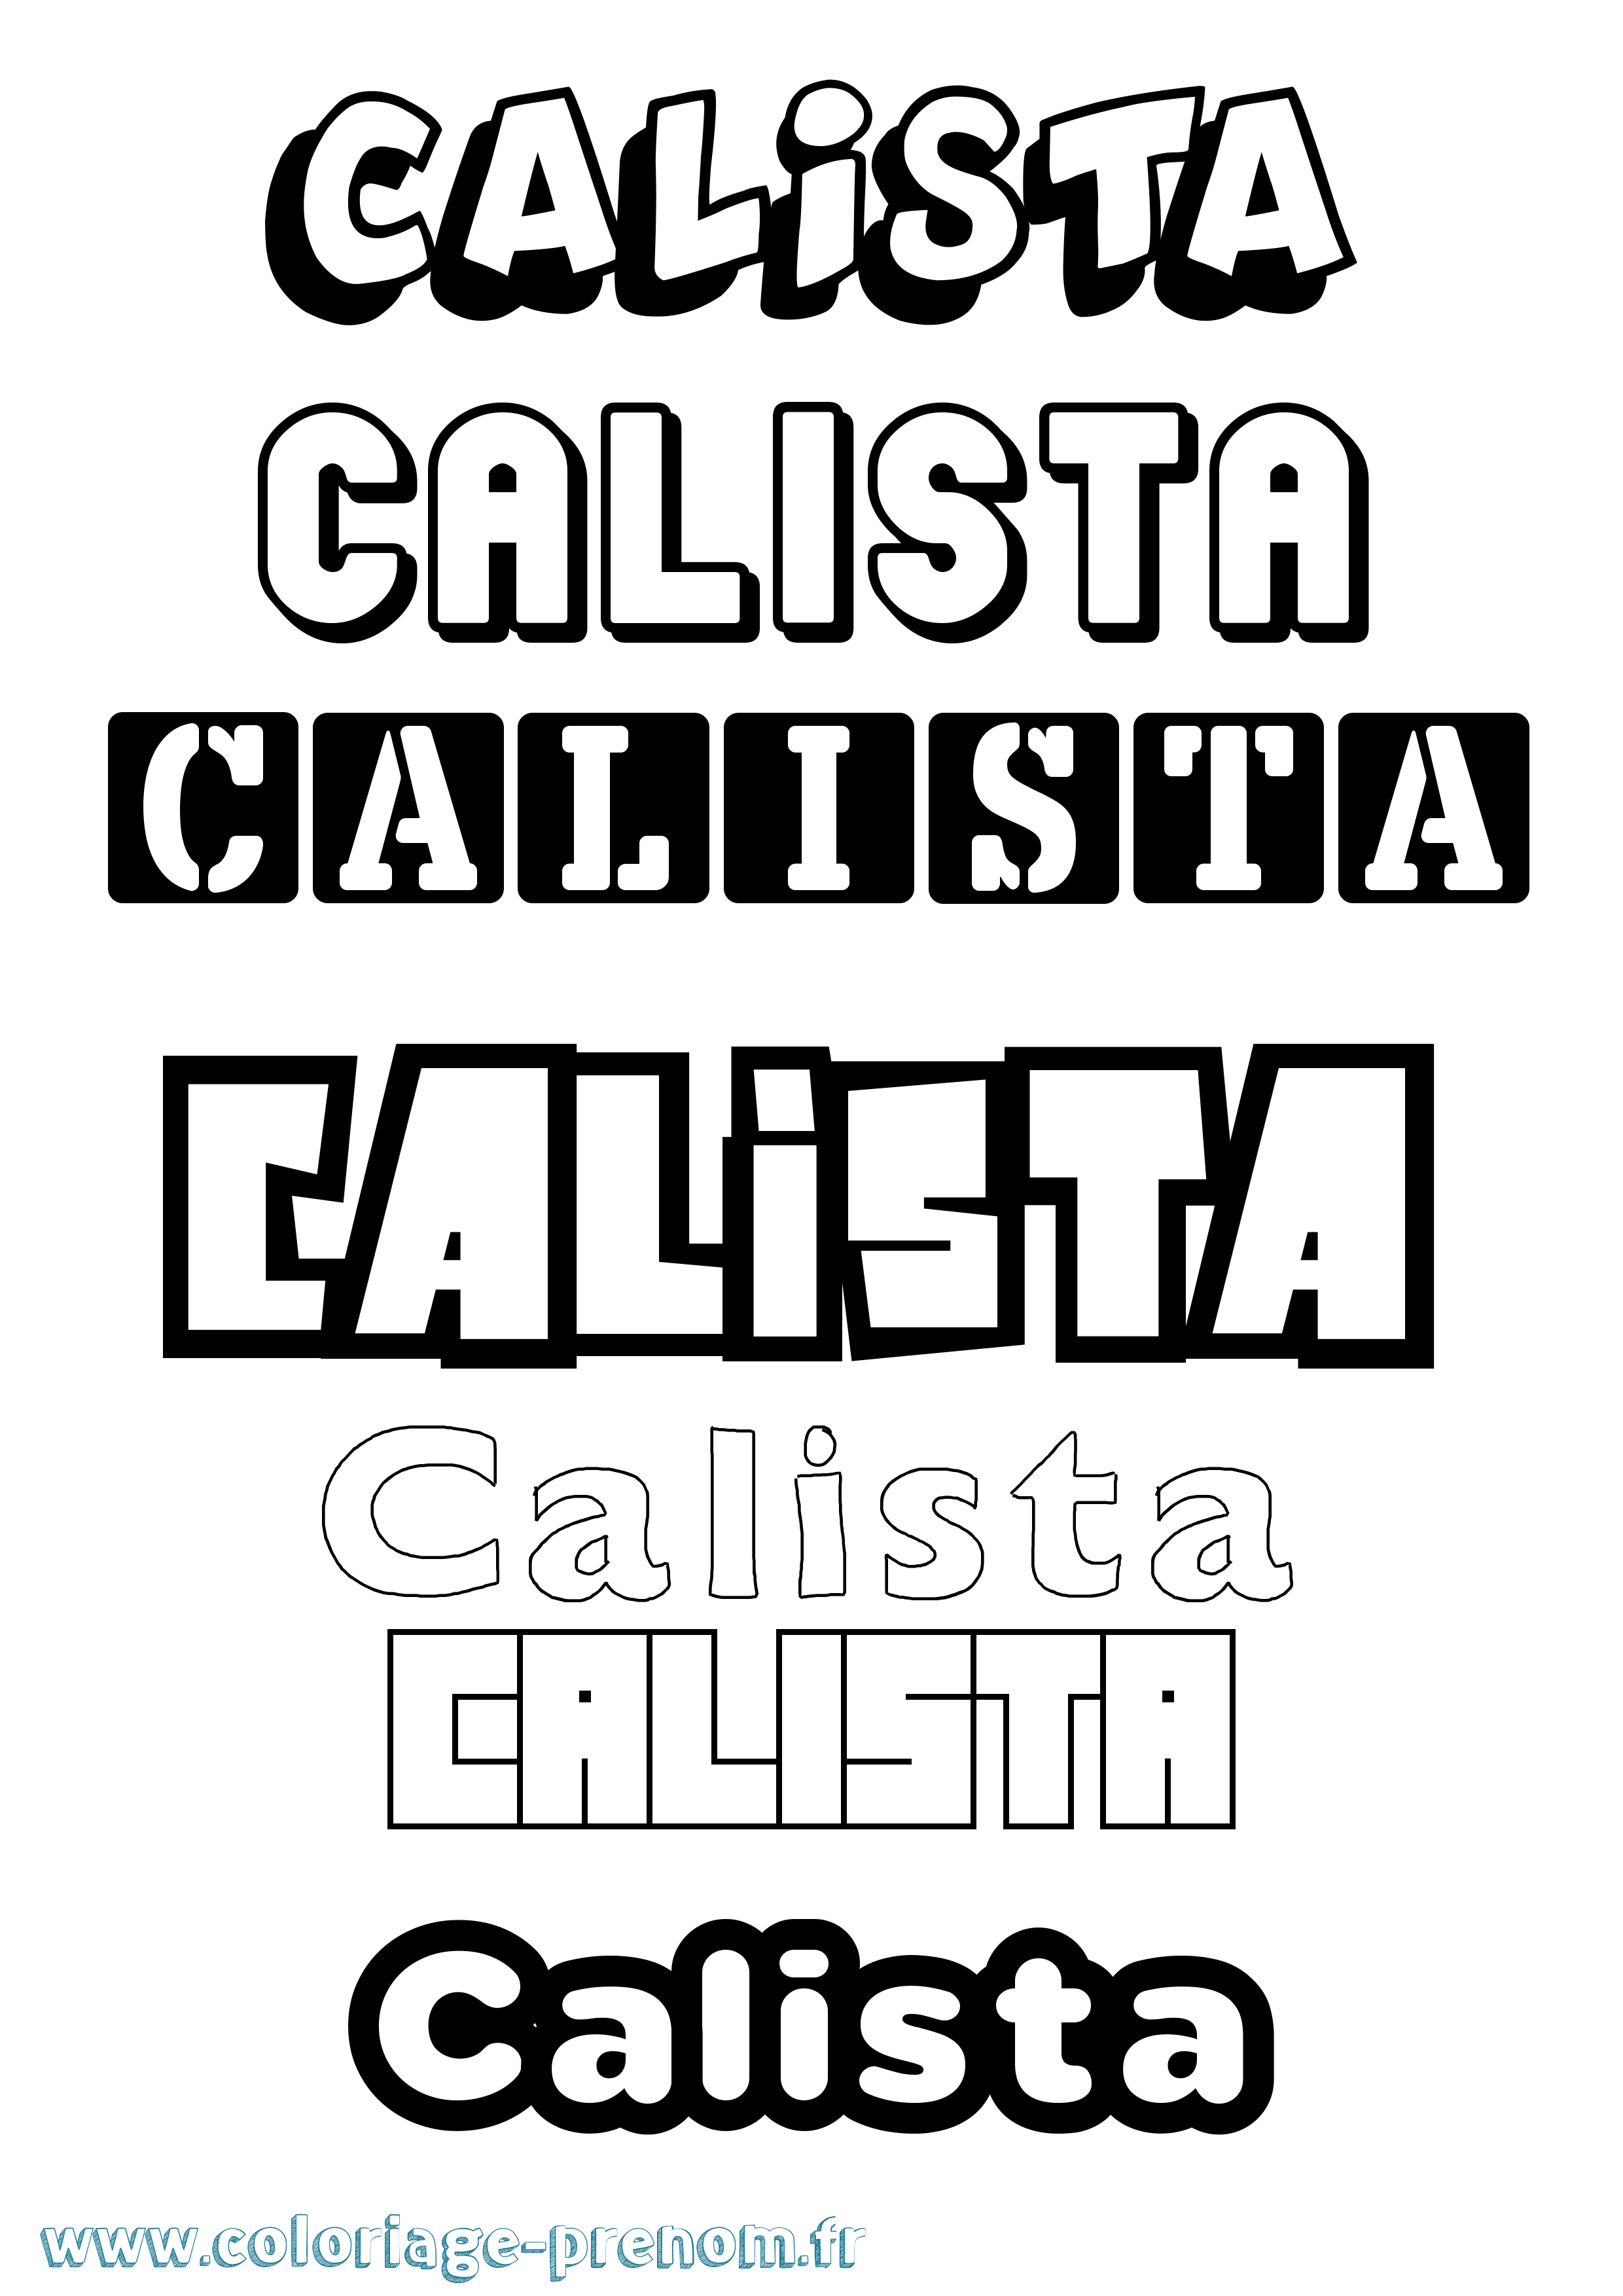 Coloriage prénom Calista